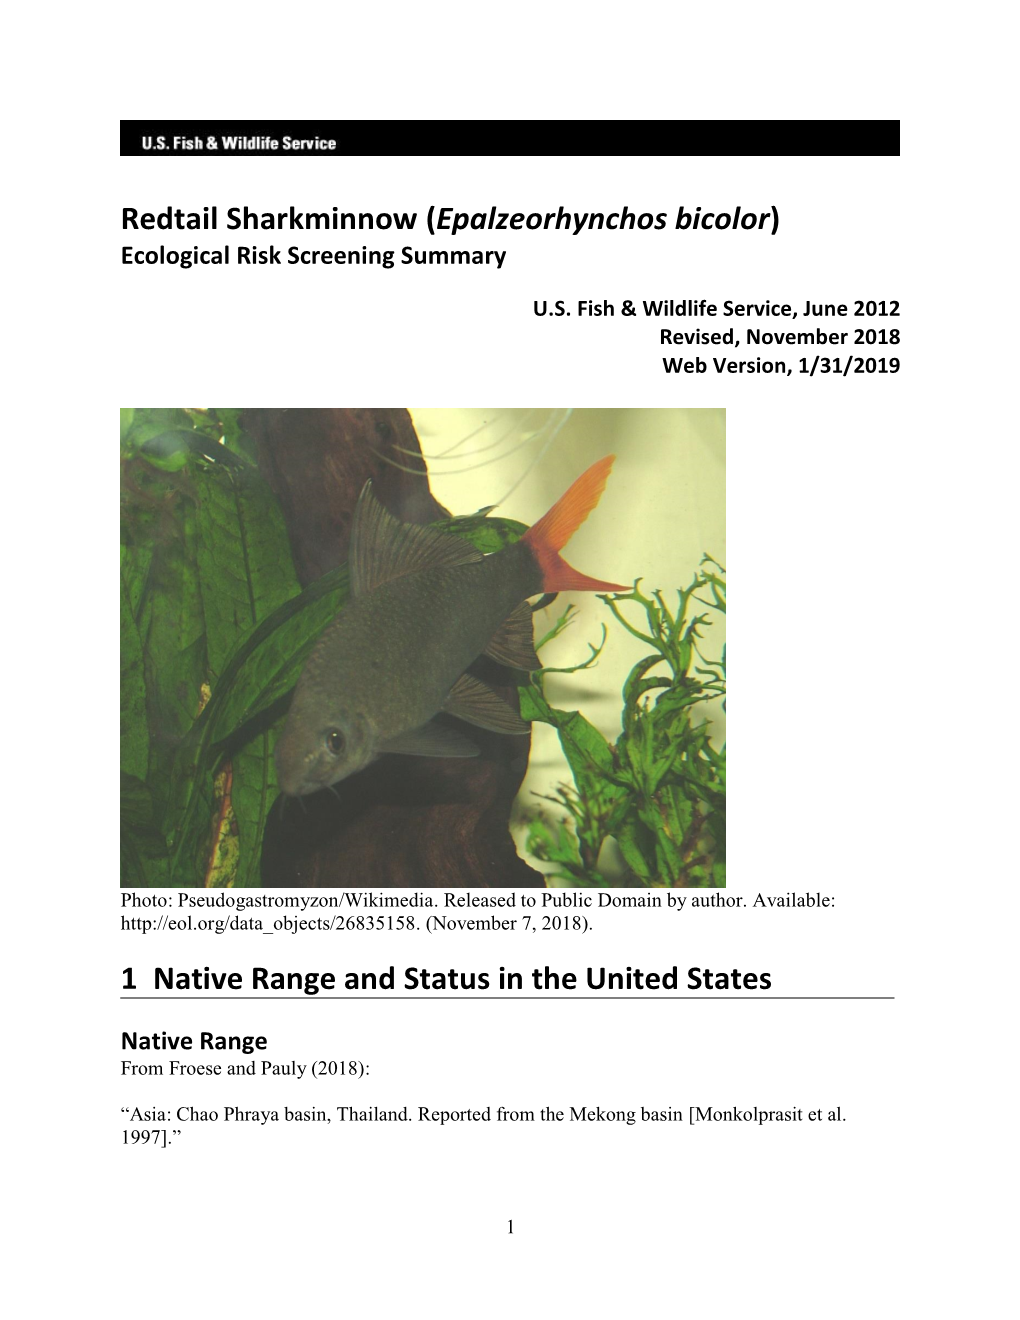 Epalzeorhynchos Bicolor) Ecological Risk Screening Summary